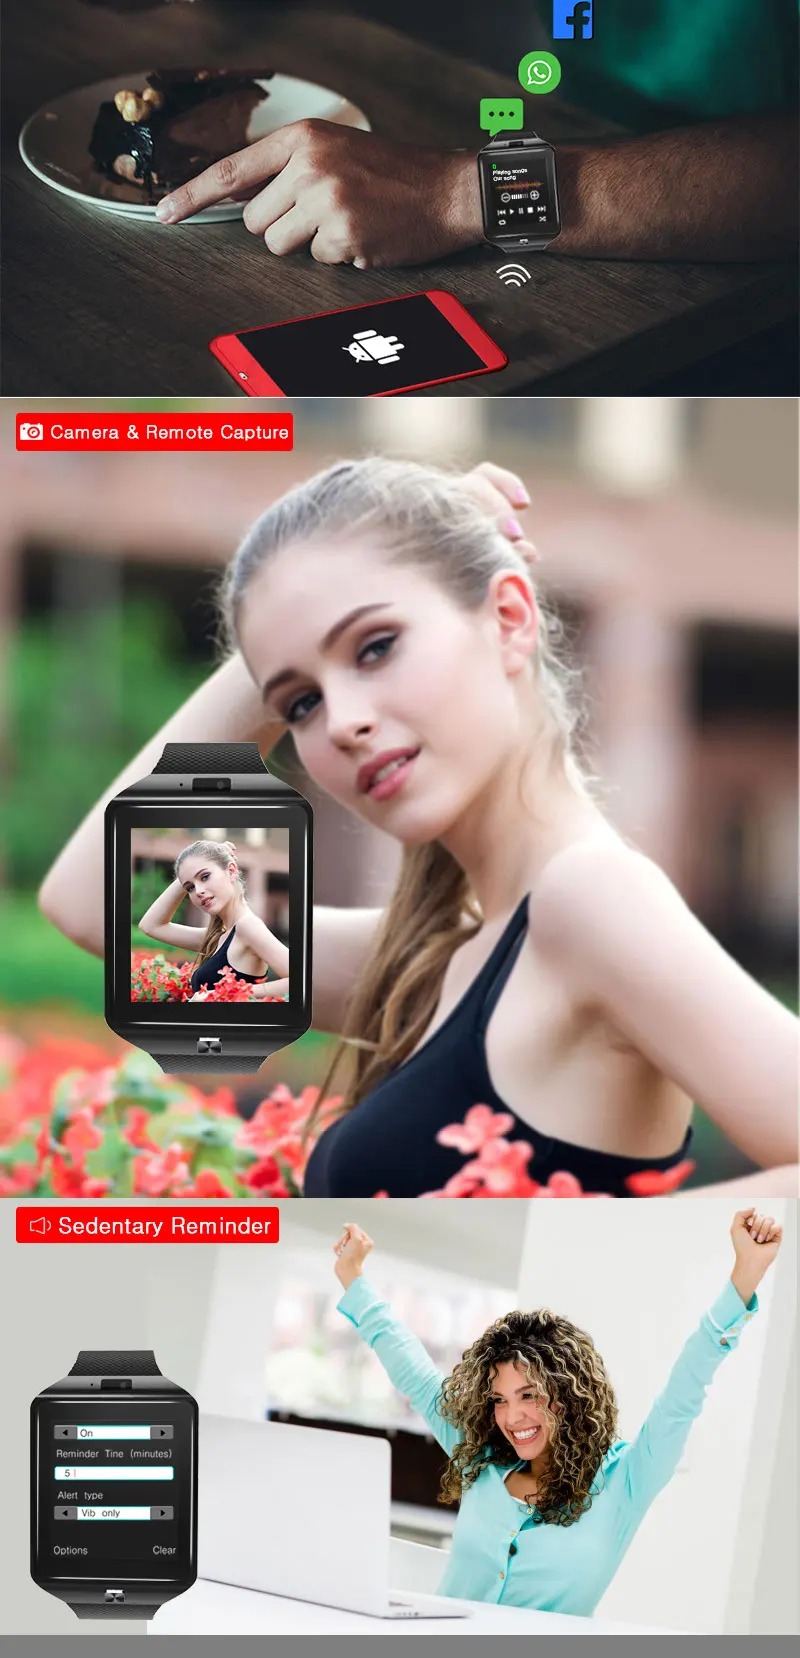 Eonline Smart Watch Men Wrist wireless Watches SIM Sport Smartwatch ios Camera For Apple iPhone Android Phone Xiaomi Watch